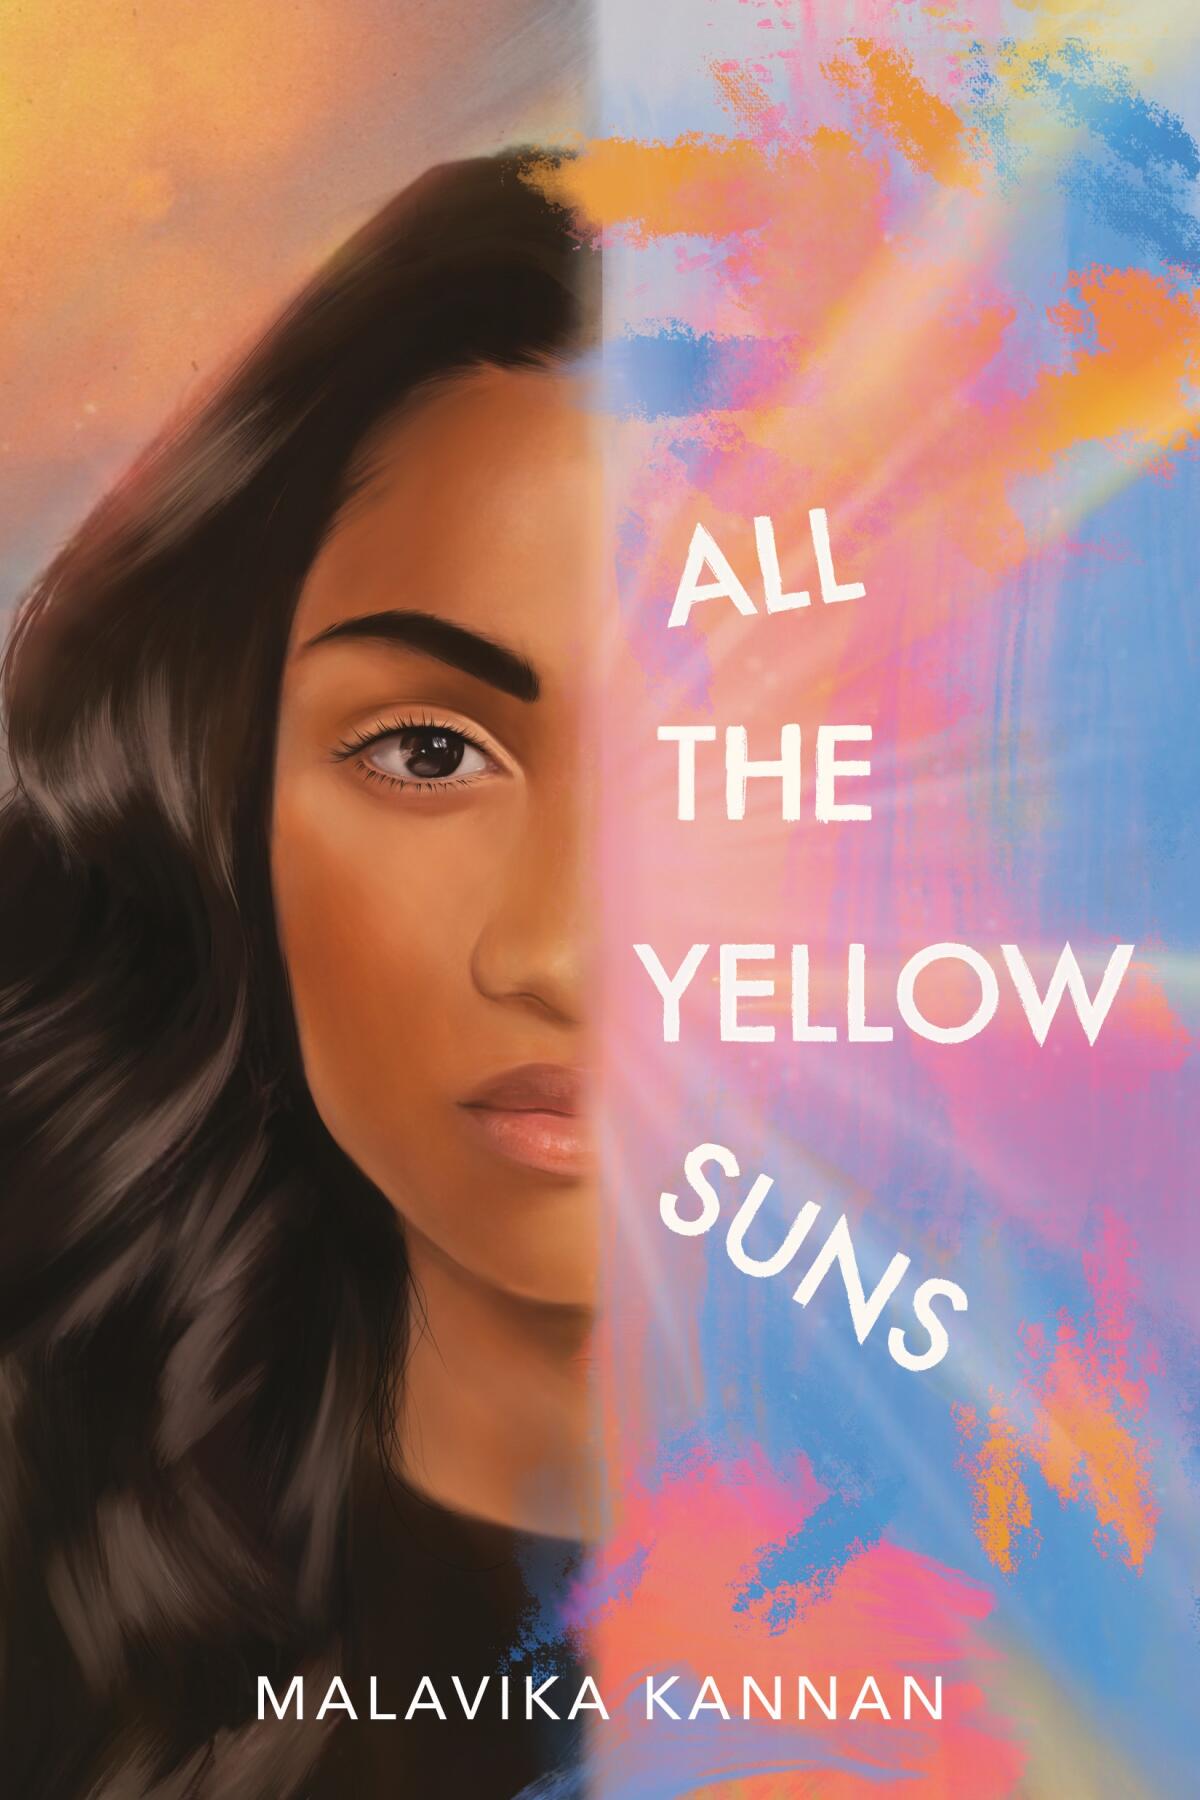 "All the Yellow Suns," by Malavika Kannan